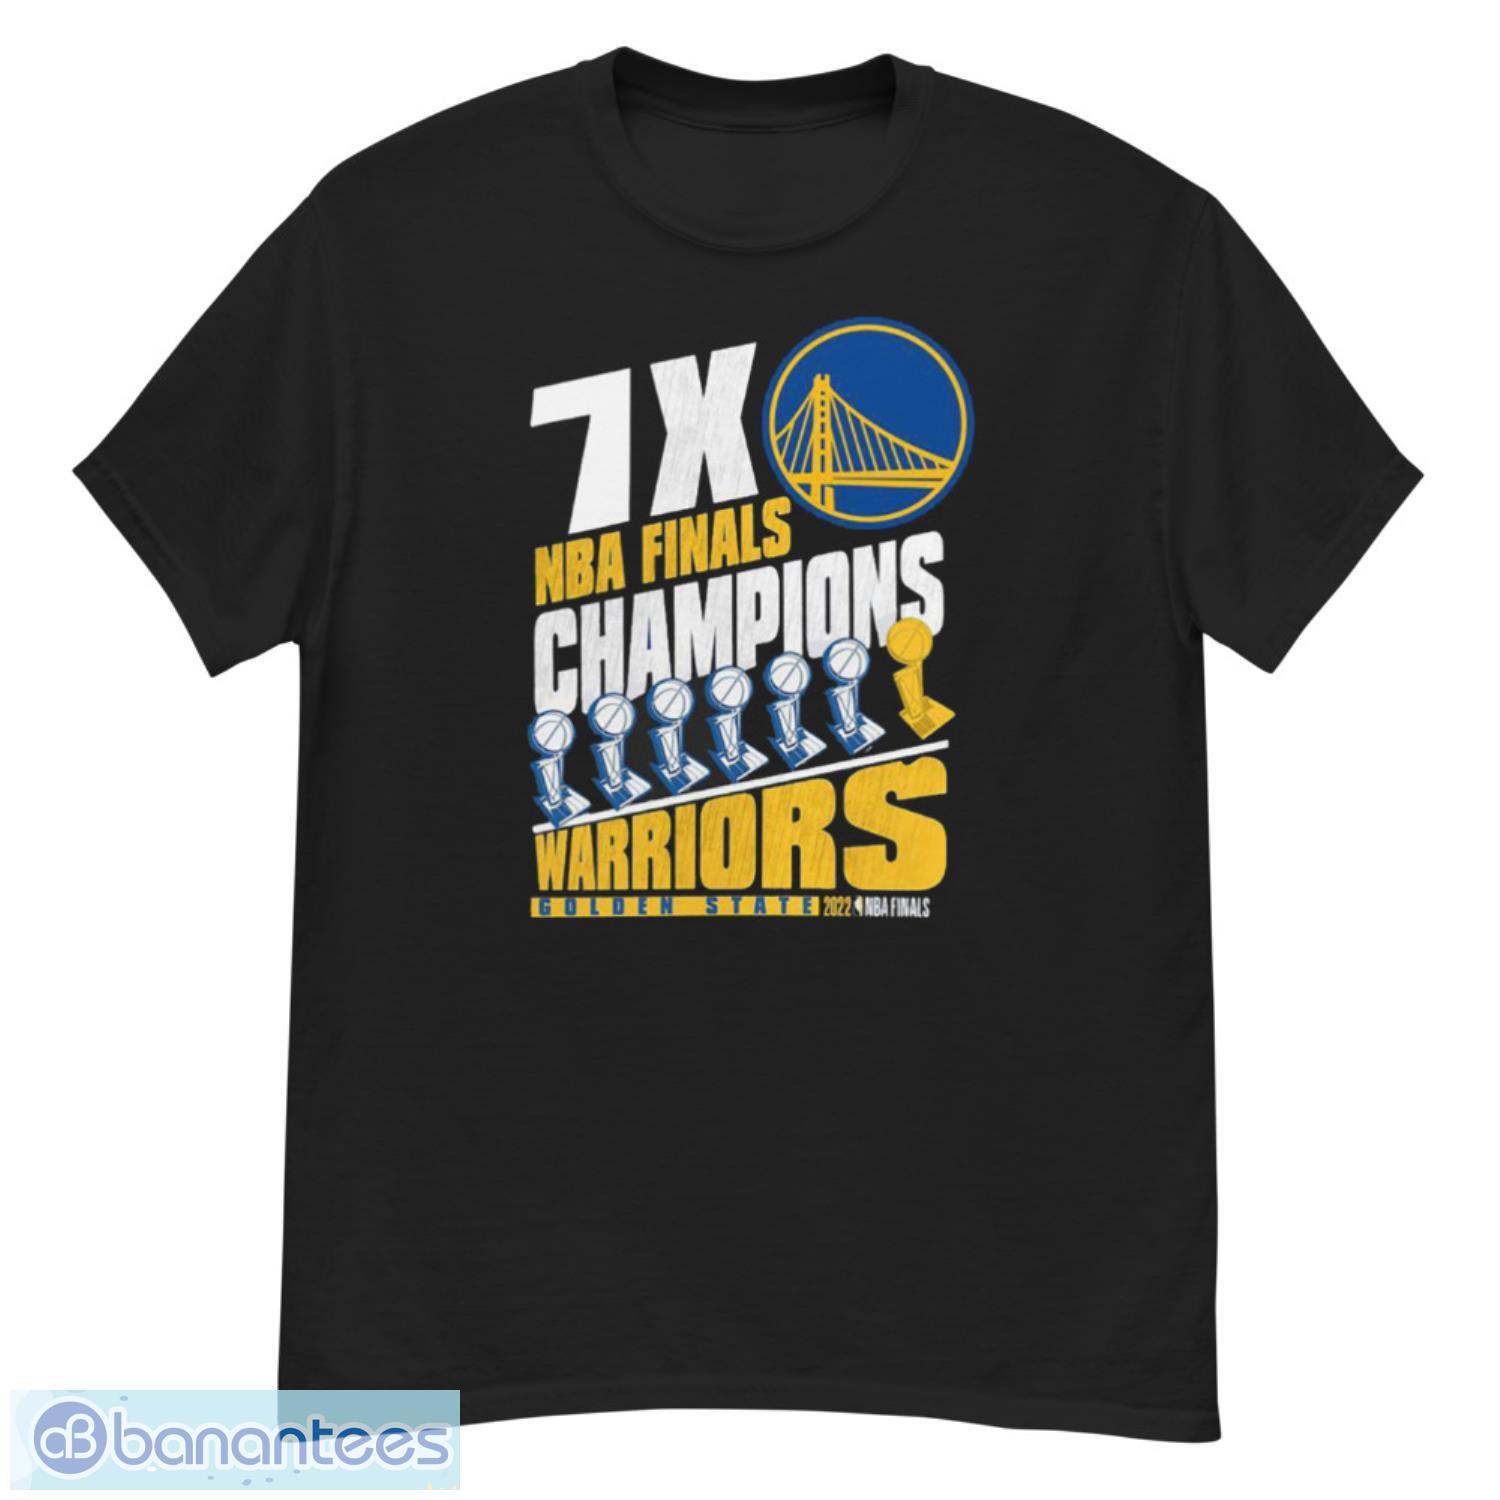 NBA Golden State Warriors Custom Name Number Royal T-Shirt